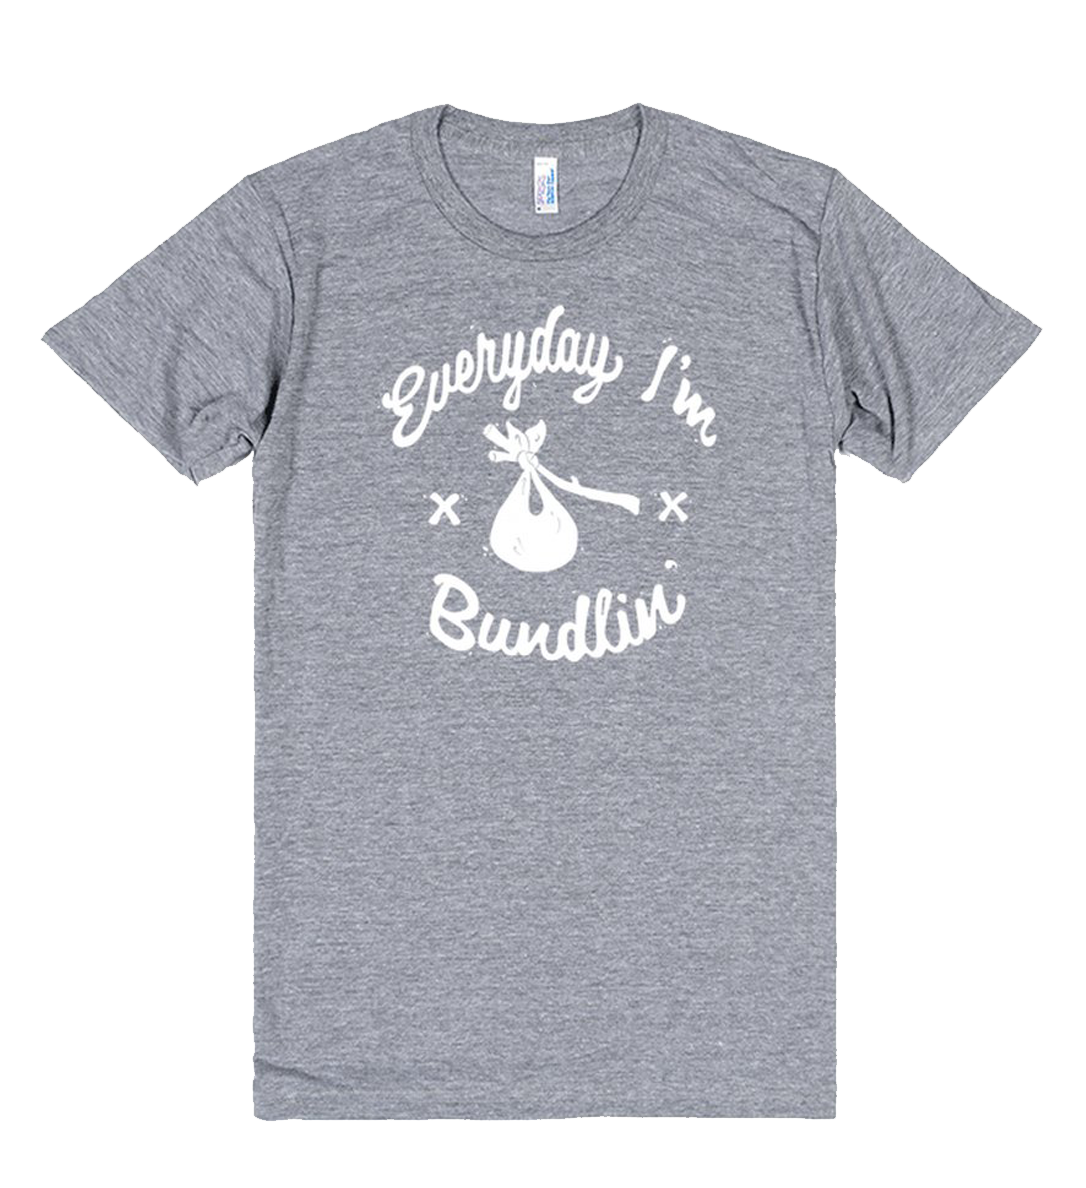 every day i'm bundlin t-shirt